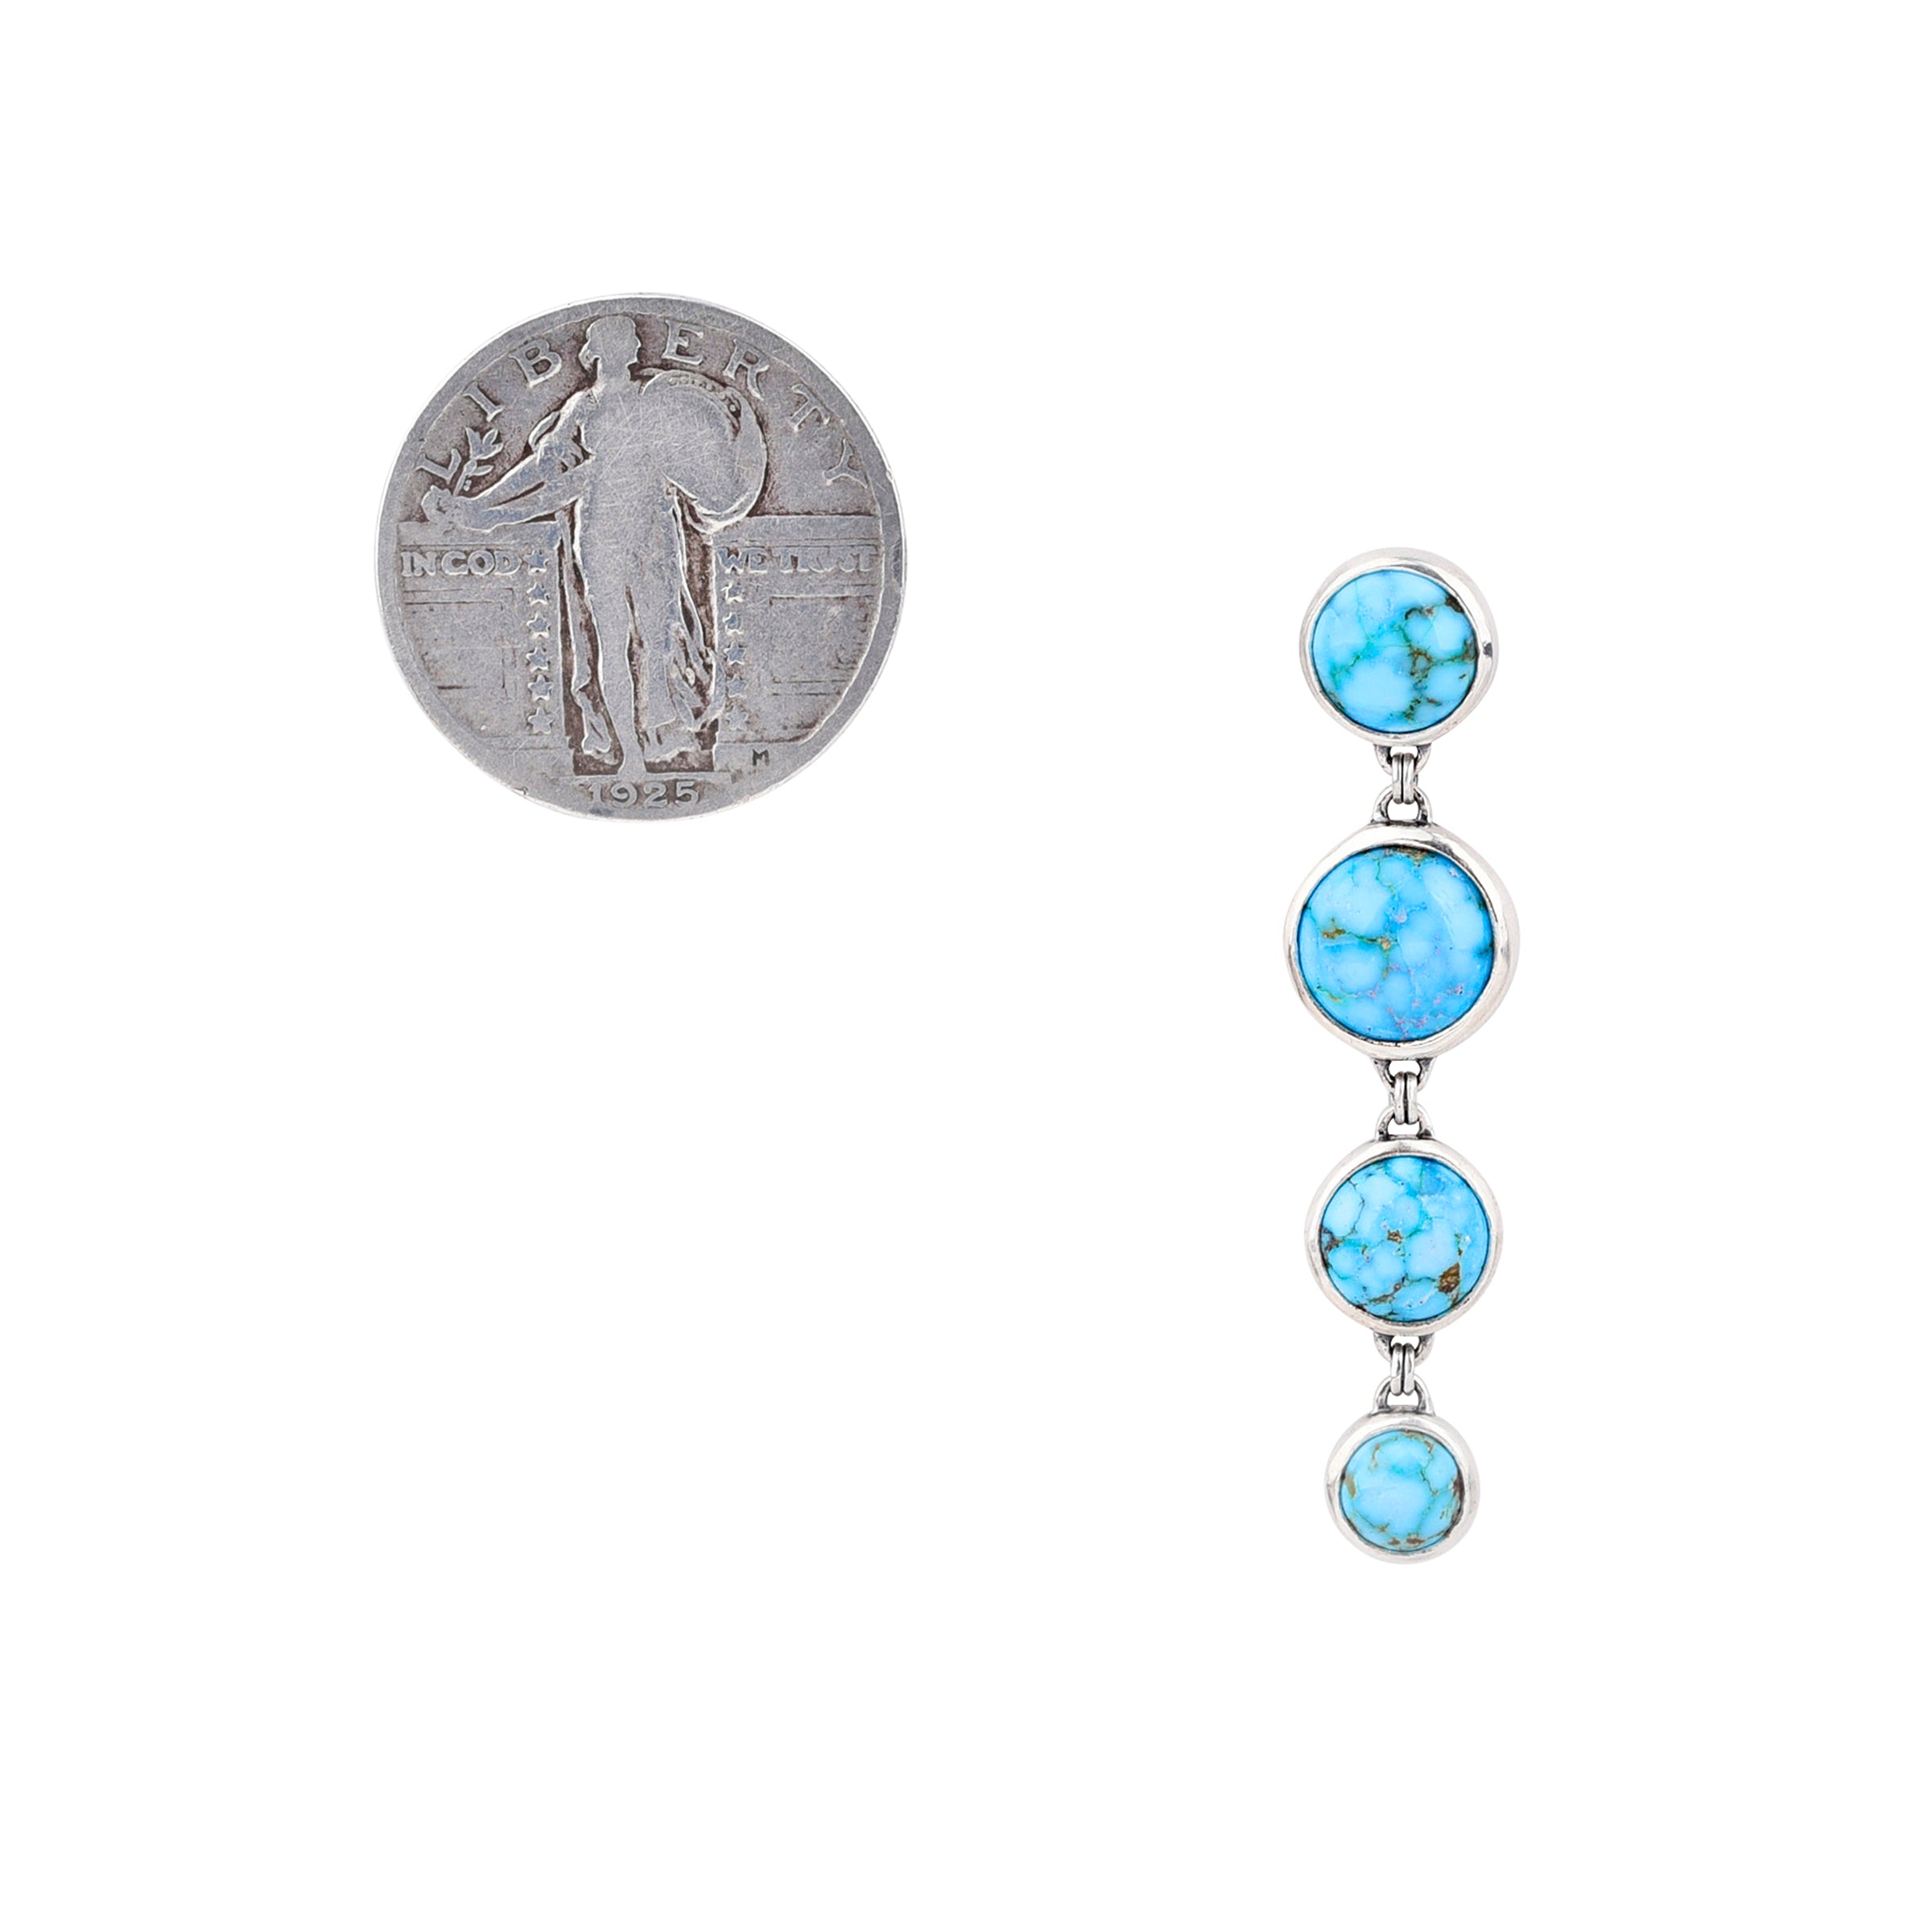 Dennis Hogan Raindrop Earrings - Spiderweb Turquoise